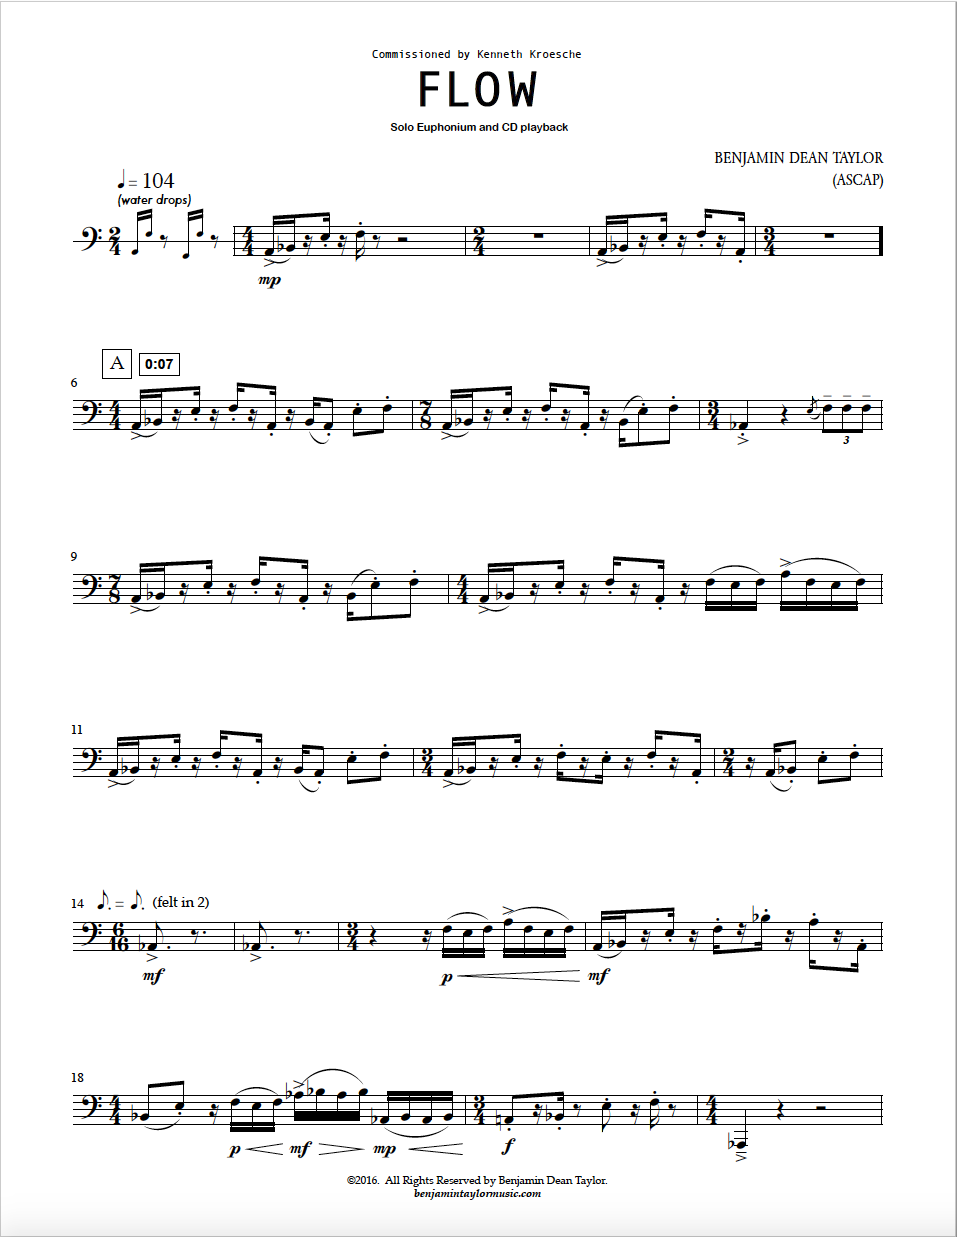 Taylor - Flow (solo euphonium and Audio Playback - Read Description)